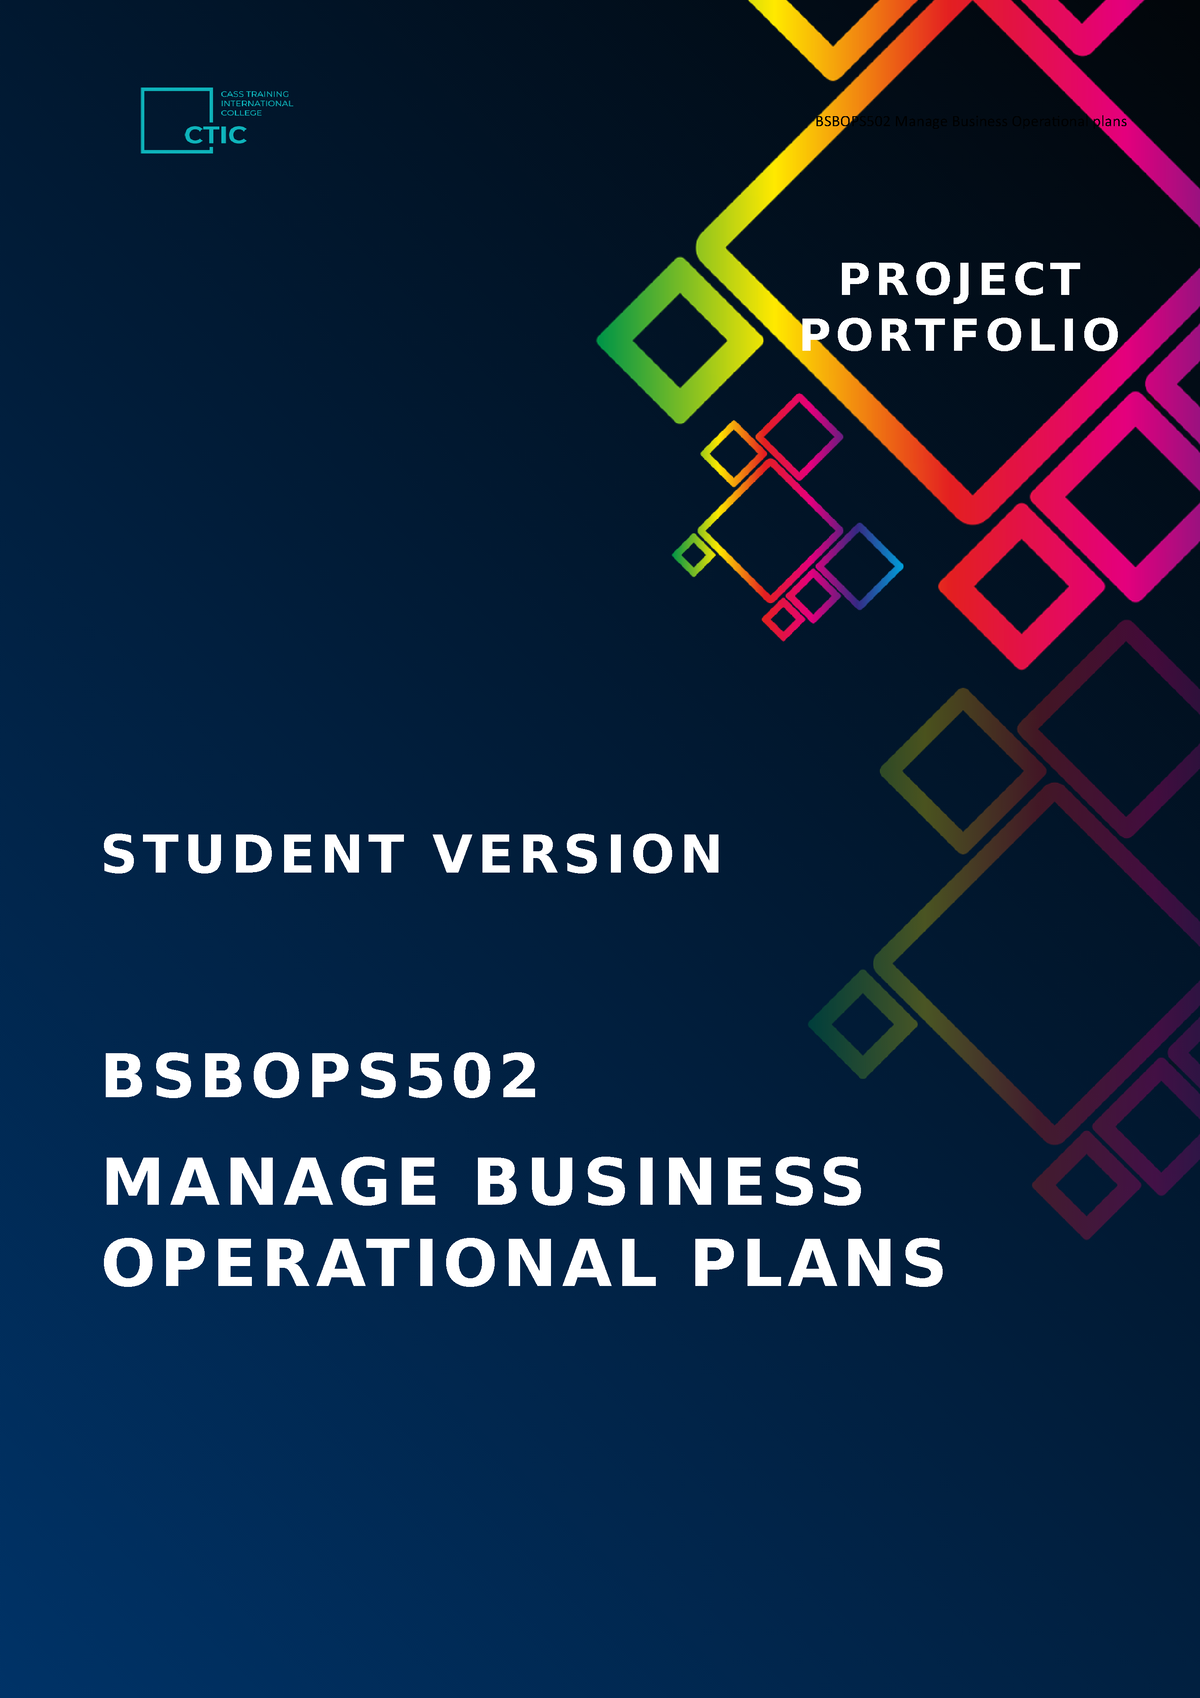 bsbops502 manage business operational plans task 2